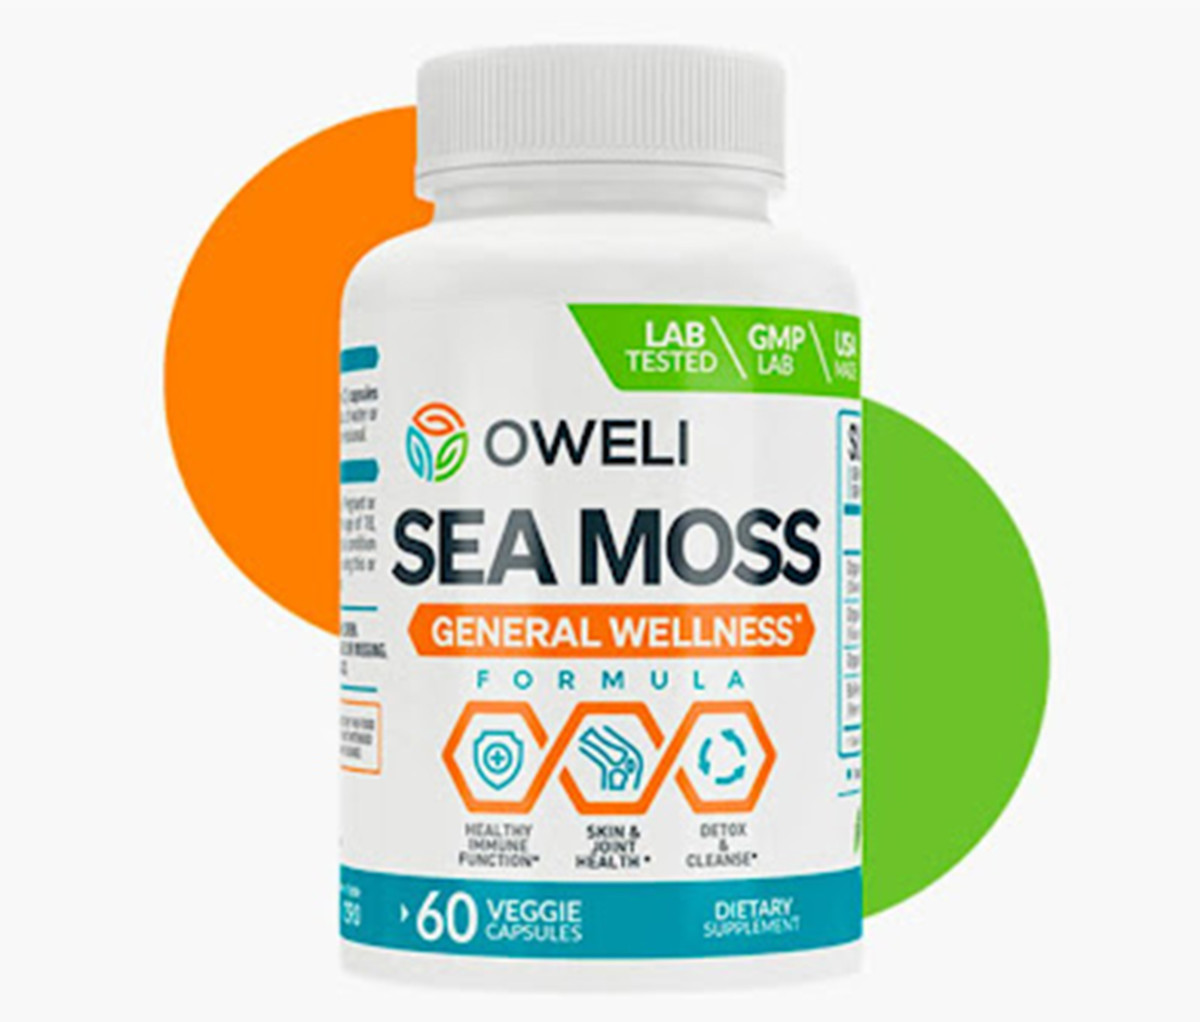 Oweli Sea Moss